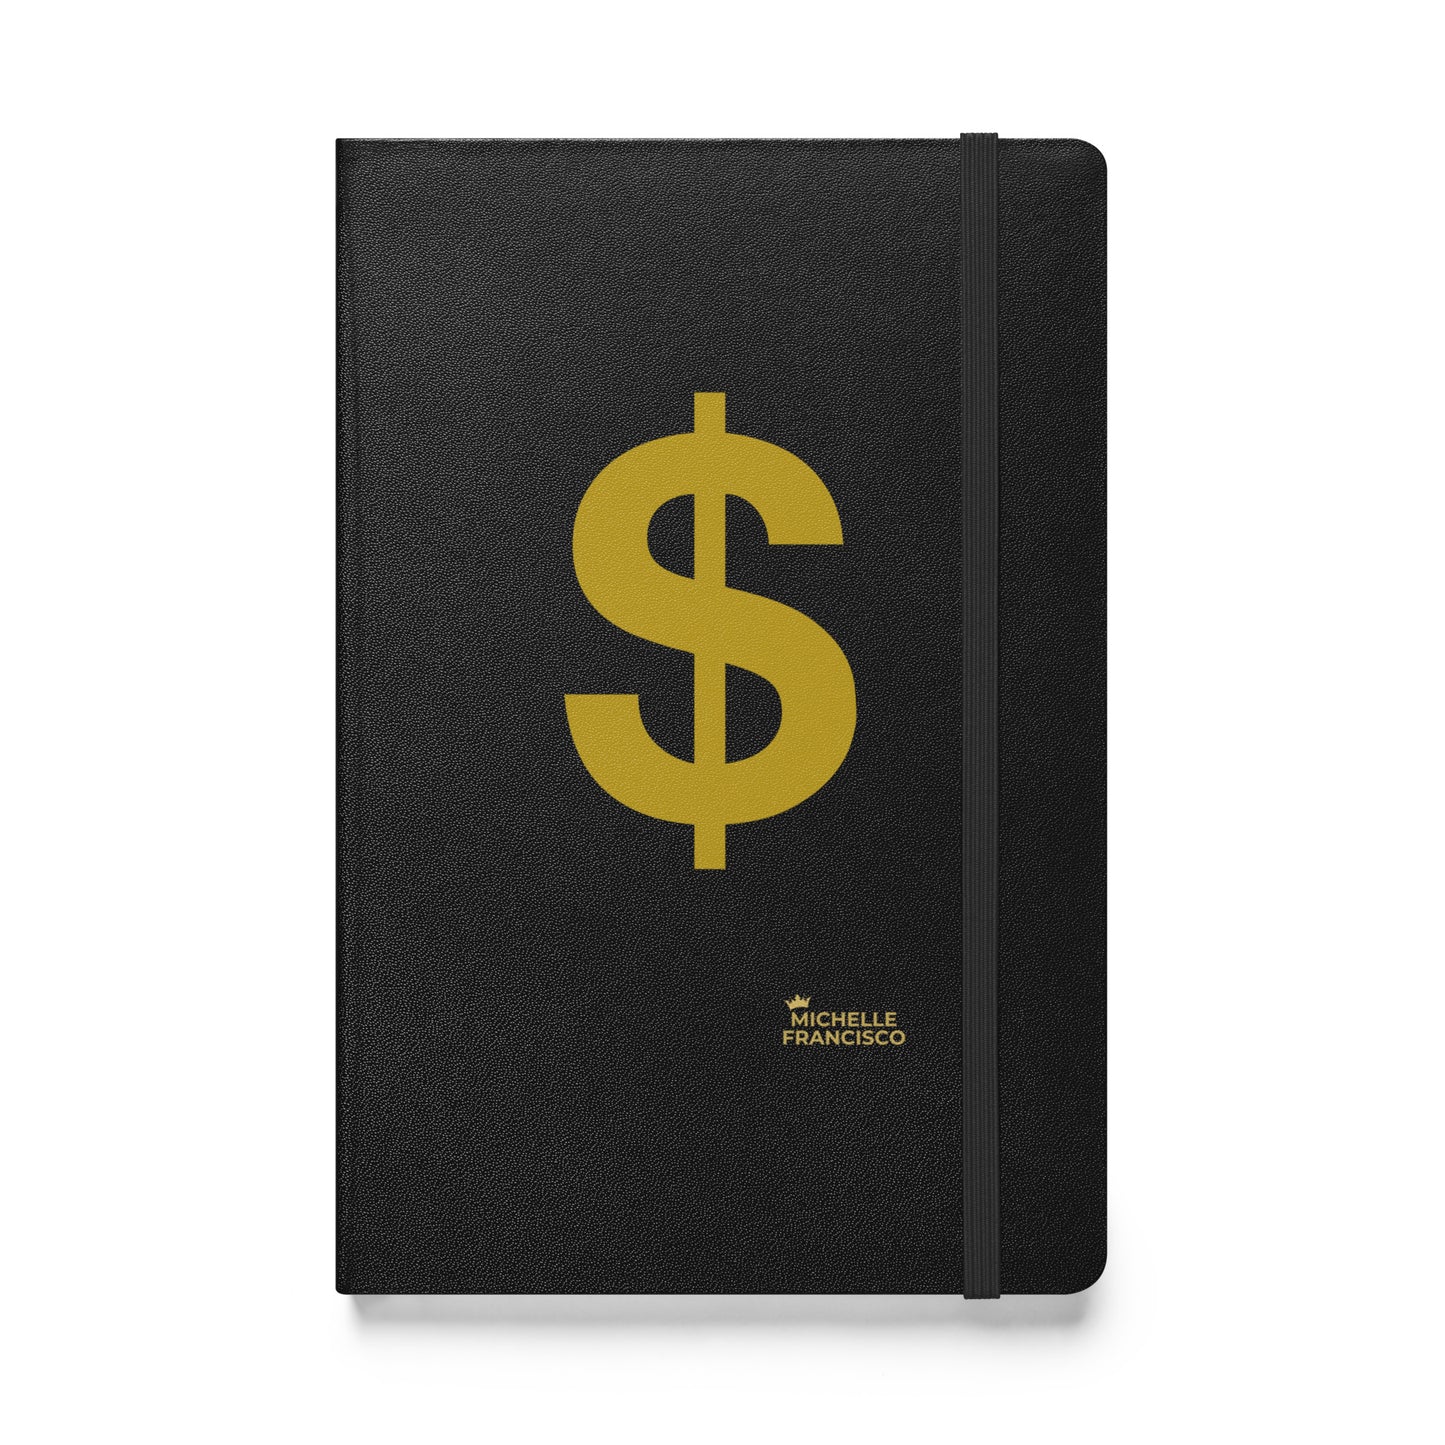 United States Dollar Hardcover Bound Notebook